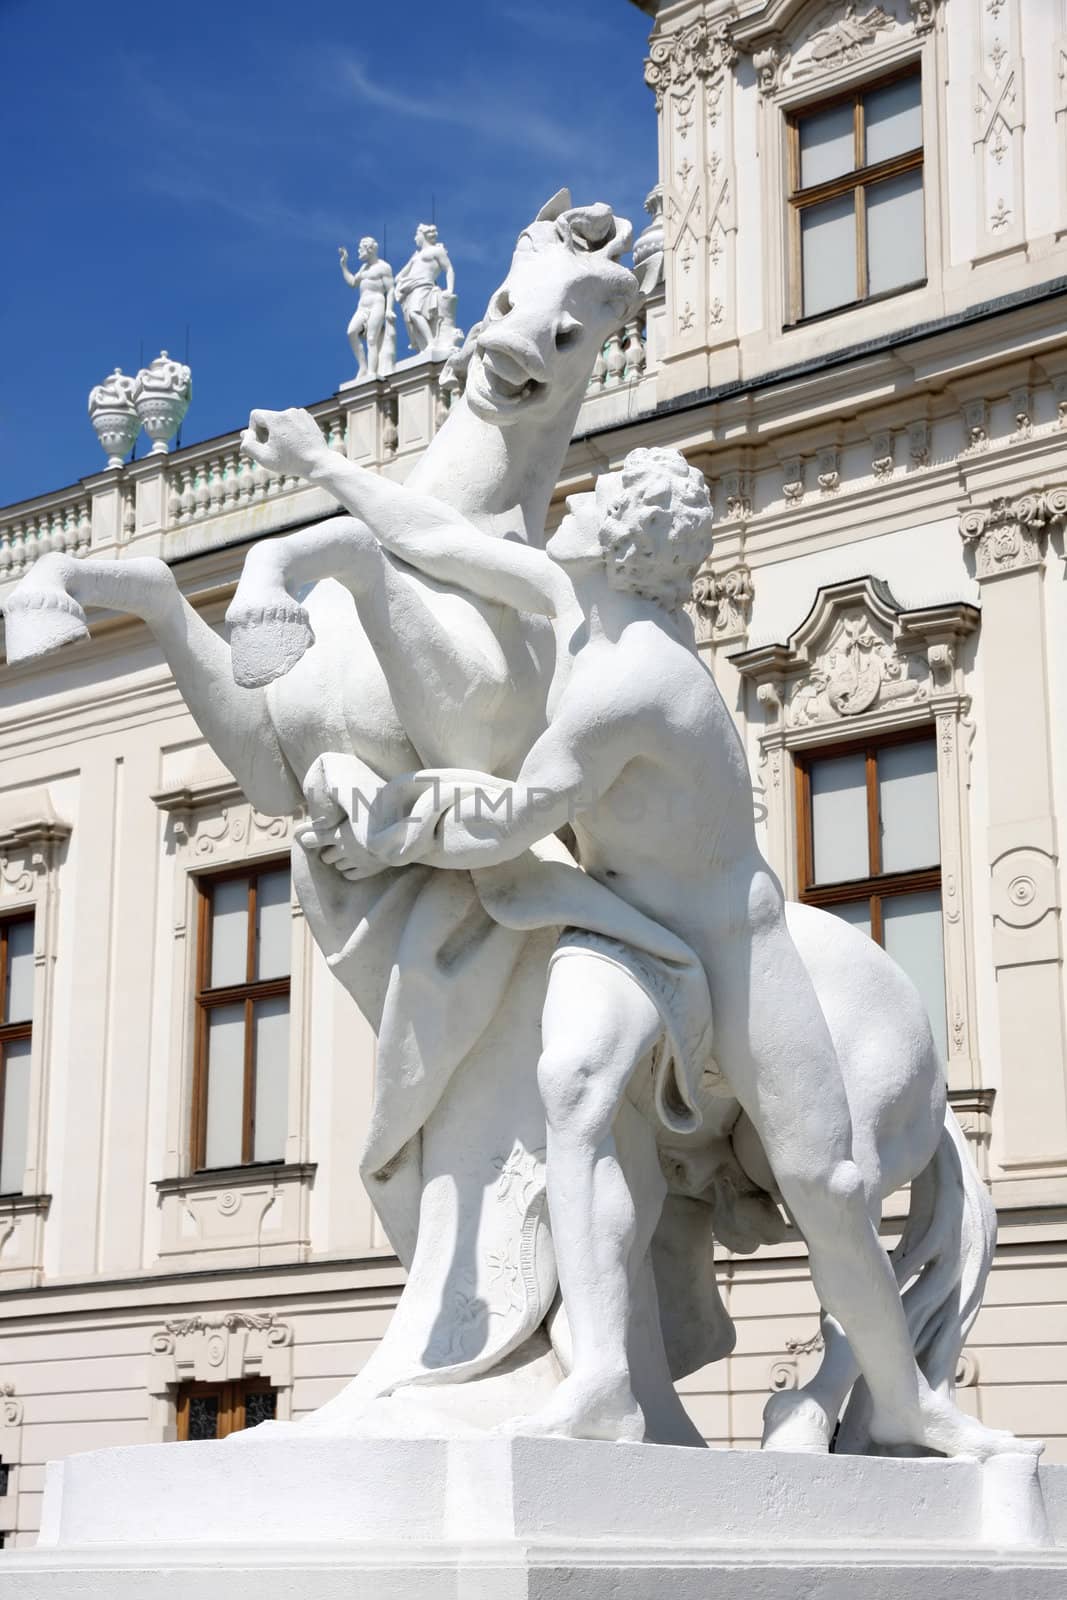 Statue at the Baroque castle Belvedere in Vienna, Austria